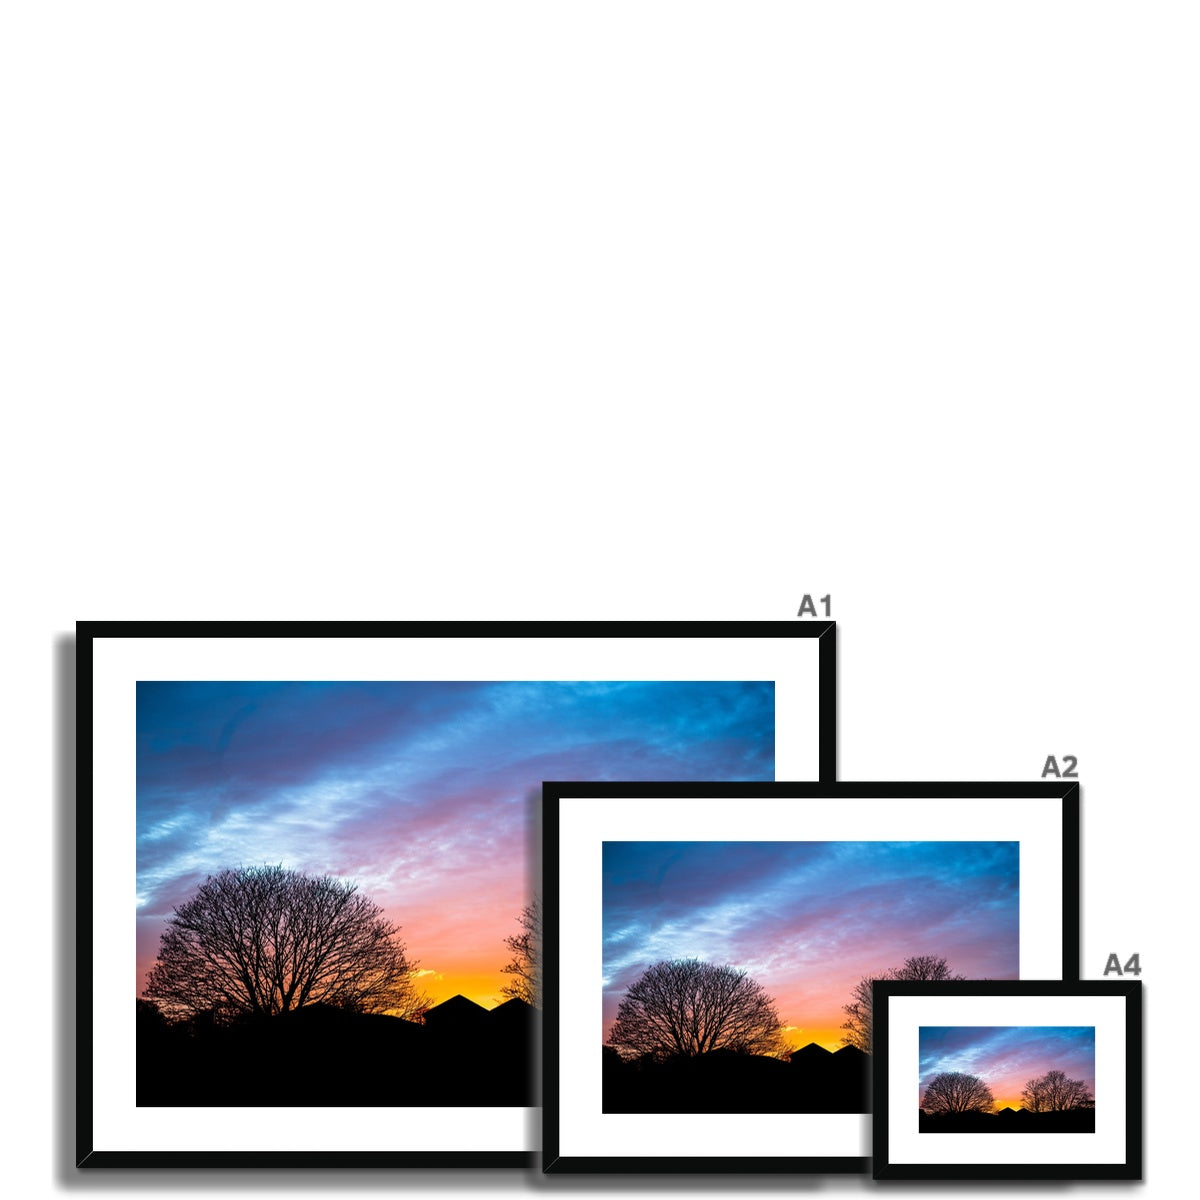 Middle Sunset Framed & Mounted Print